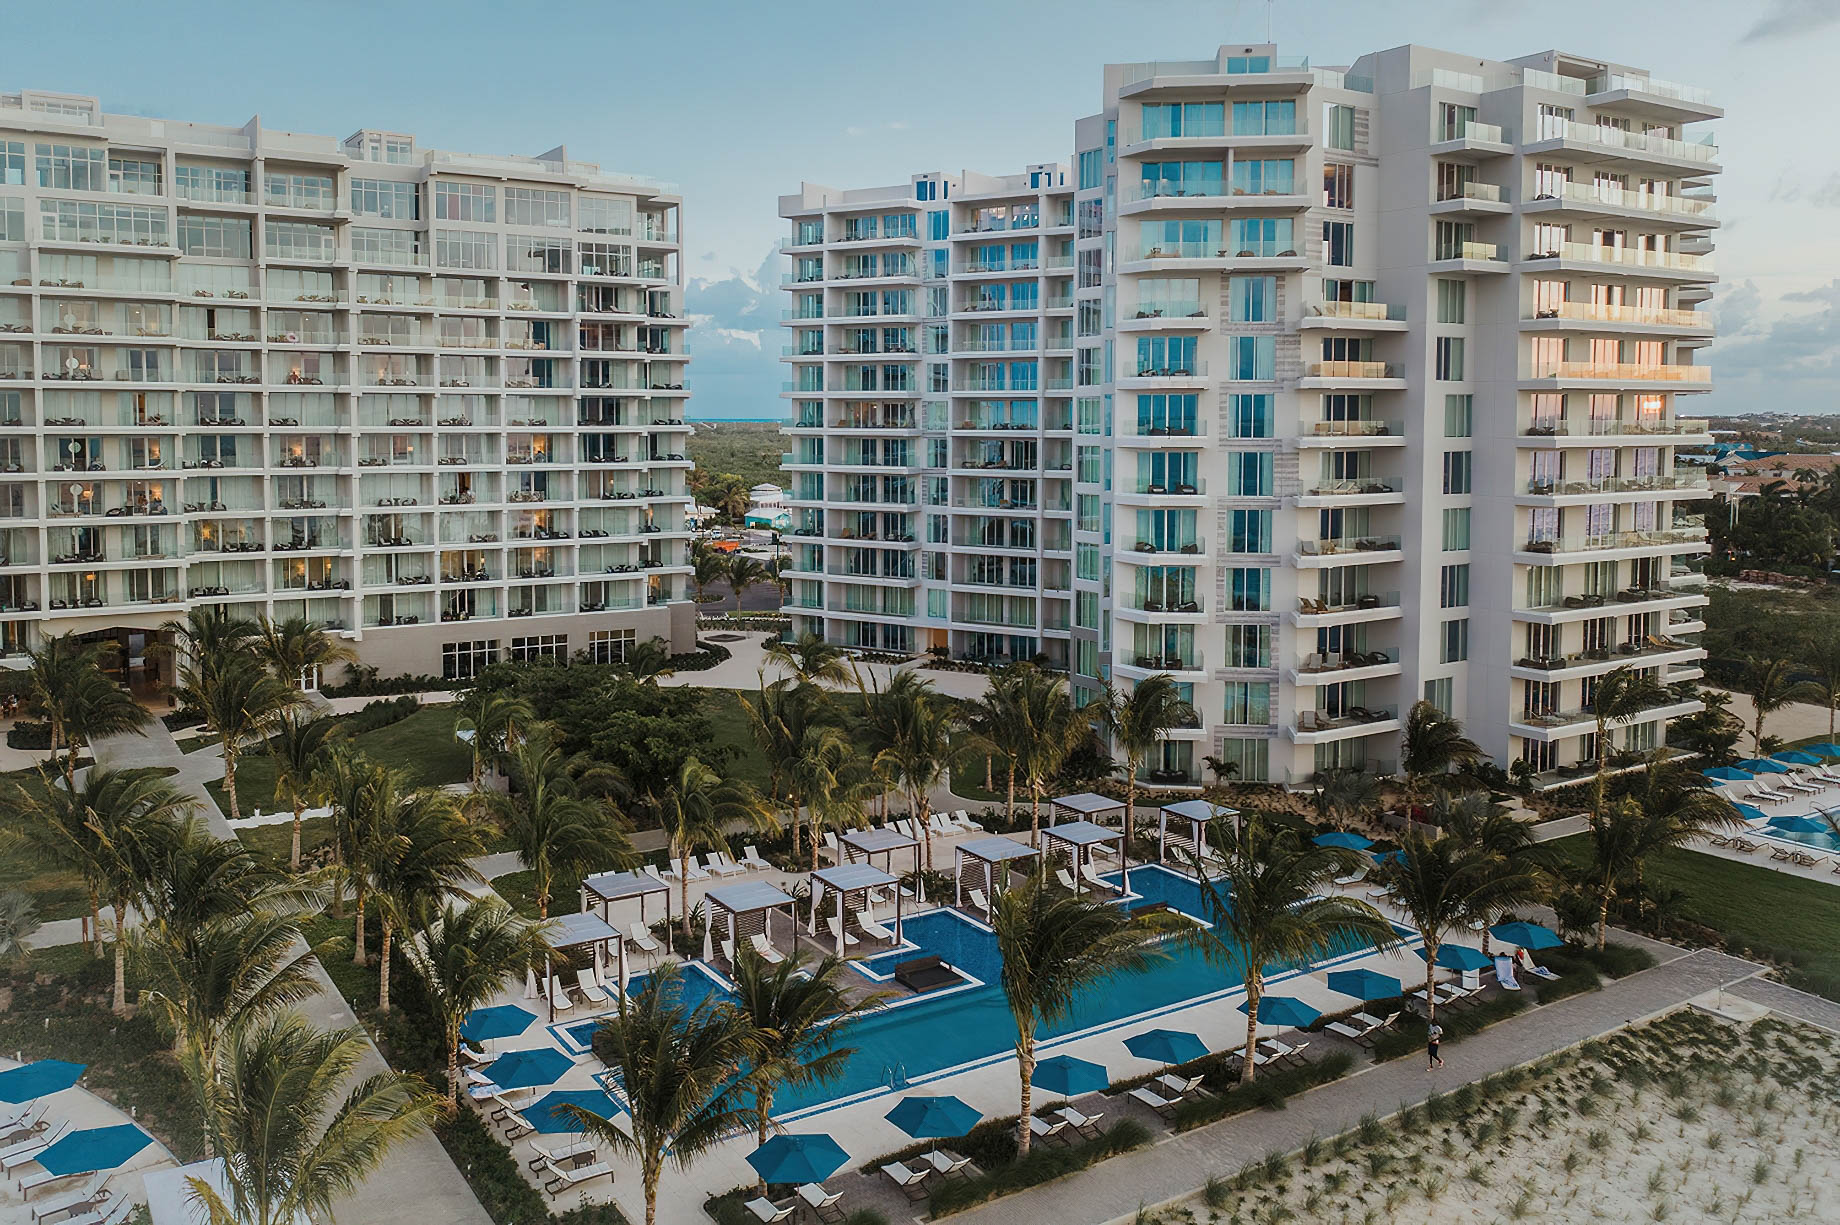 The Ritz-Carlton, Turks & Caicos Resort – Providenciales, Turks and Caicos Islands – Exterior Aerial Pool View